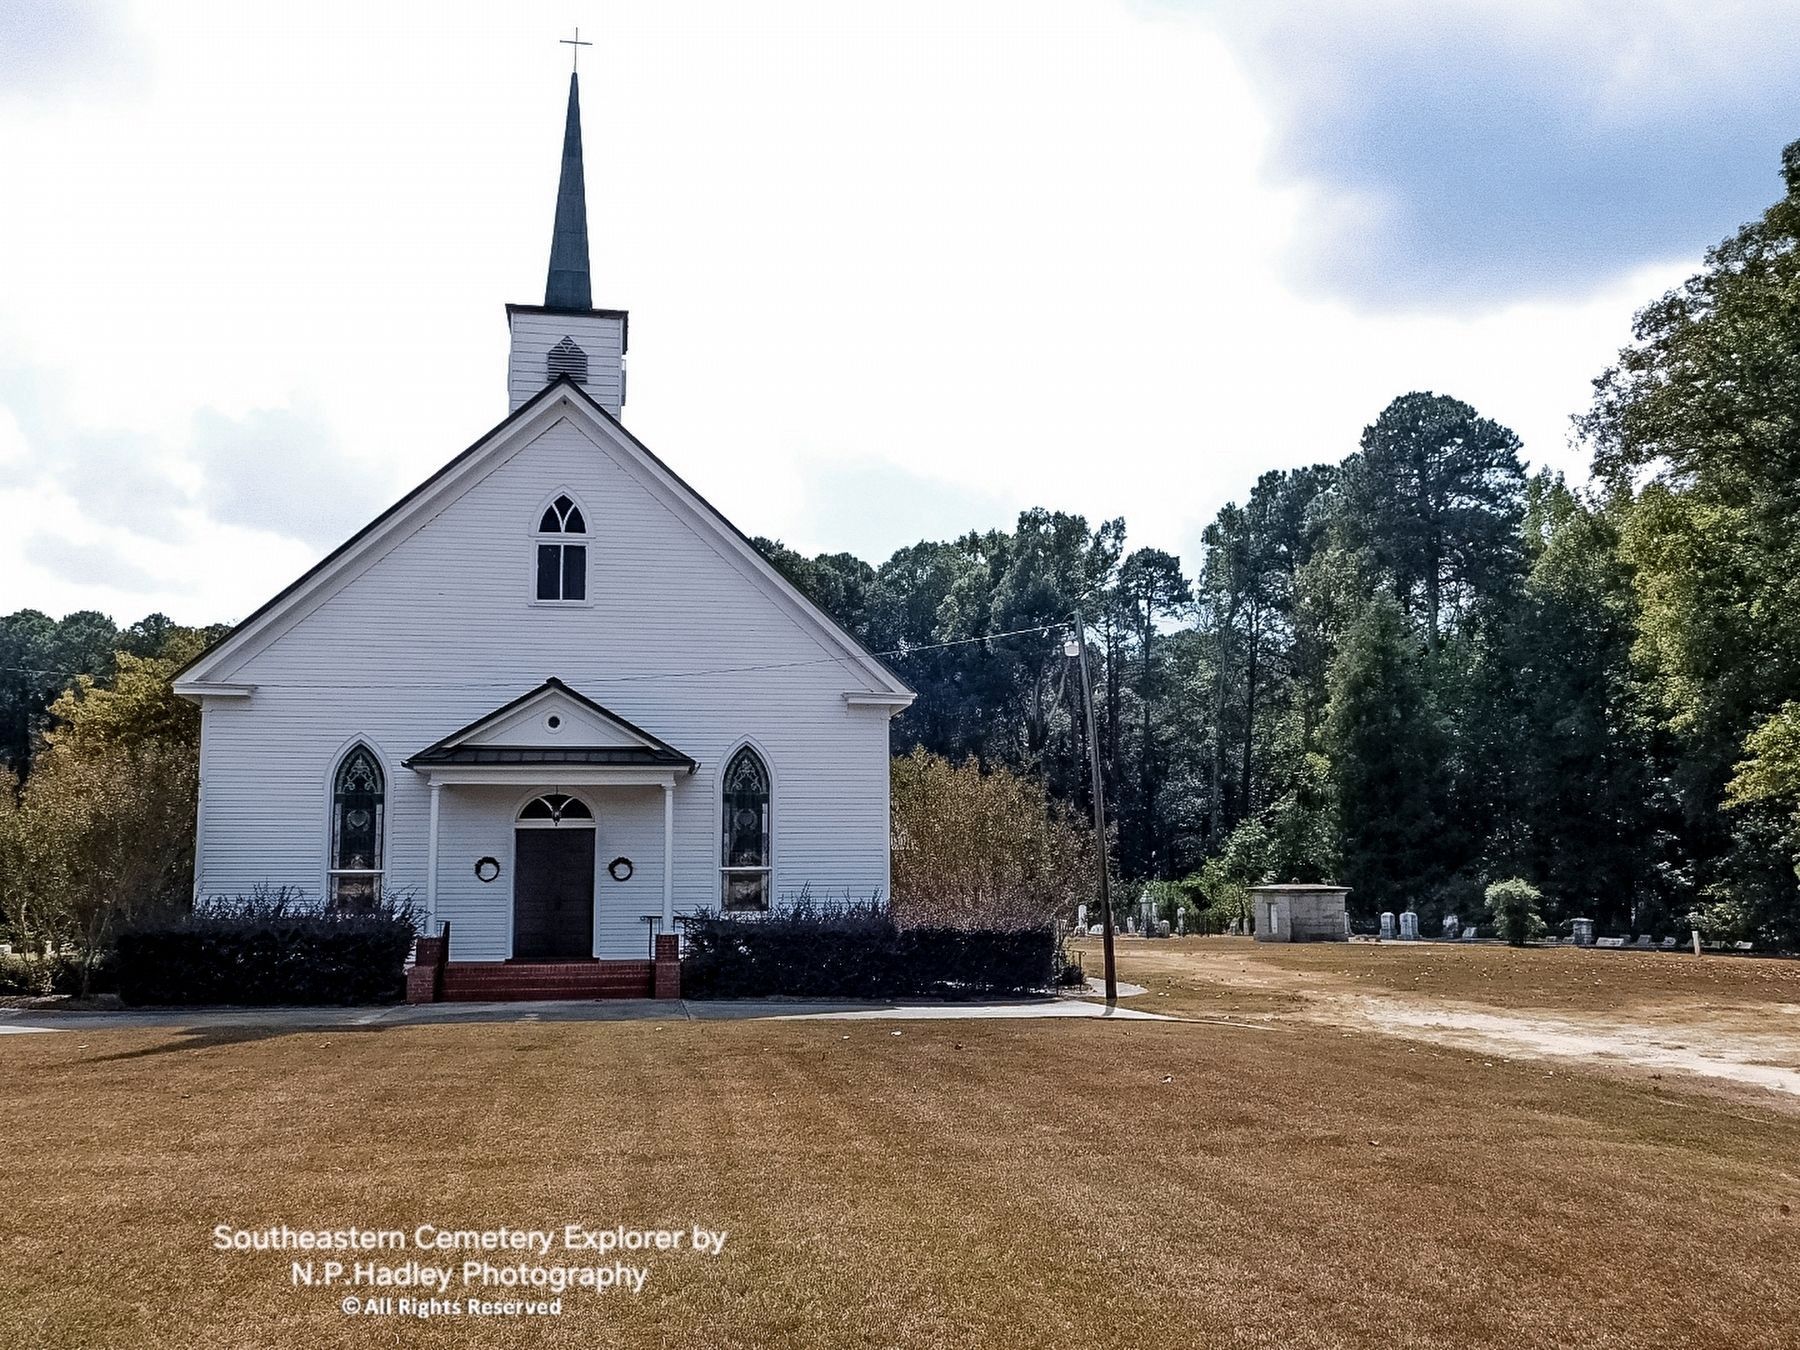 Smyrna Methodist Church Marker image. Click for full size.